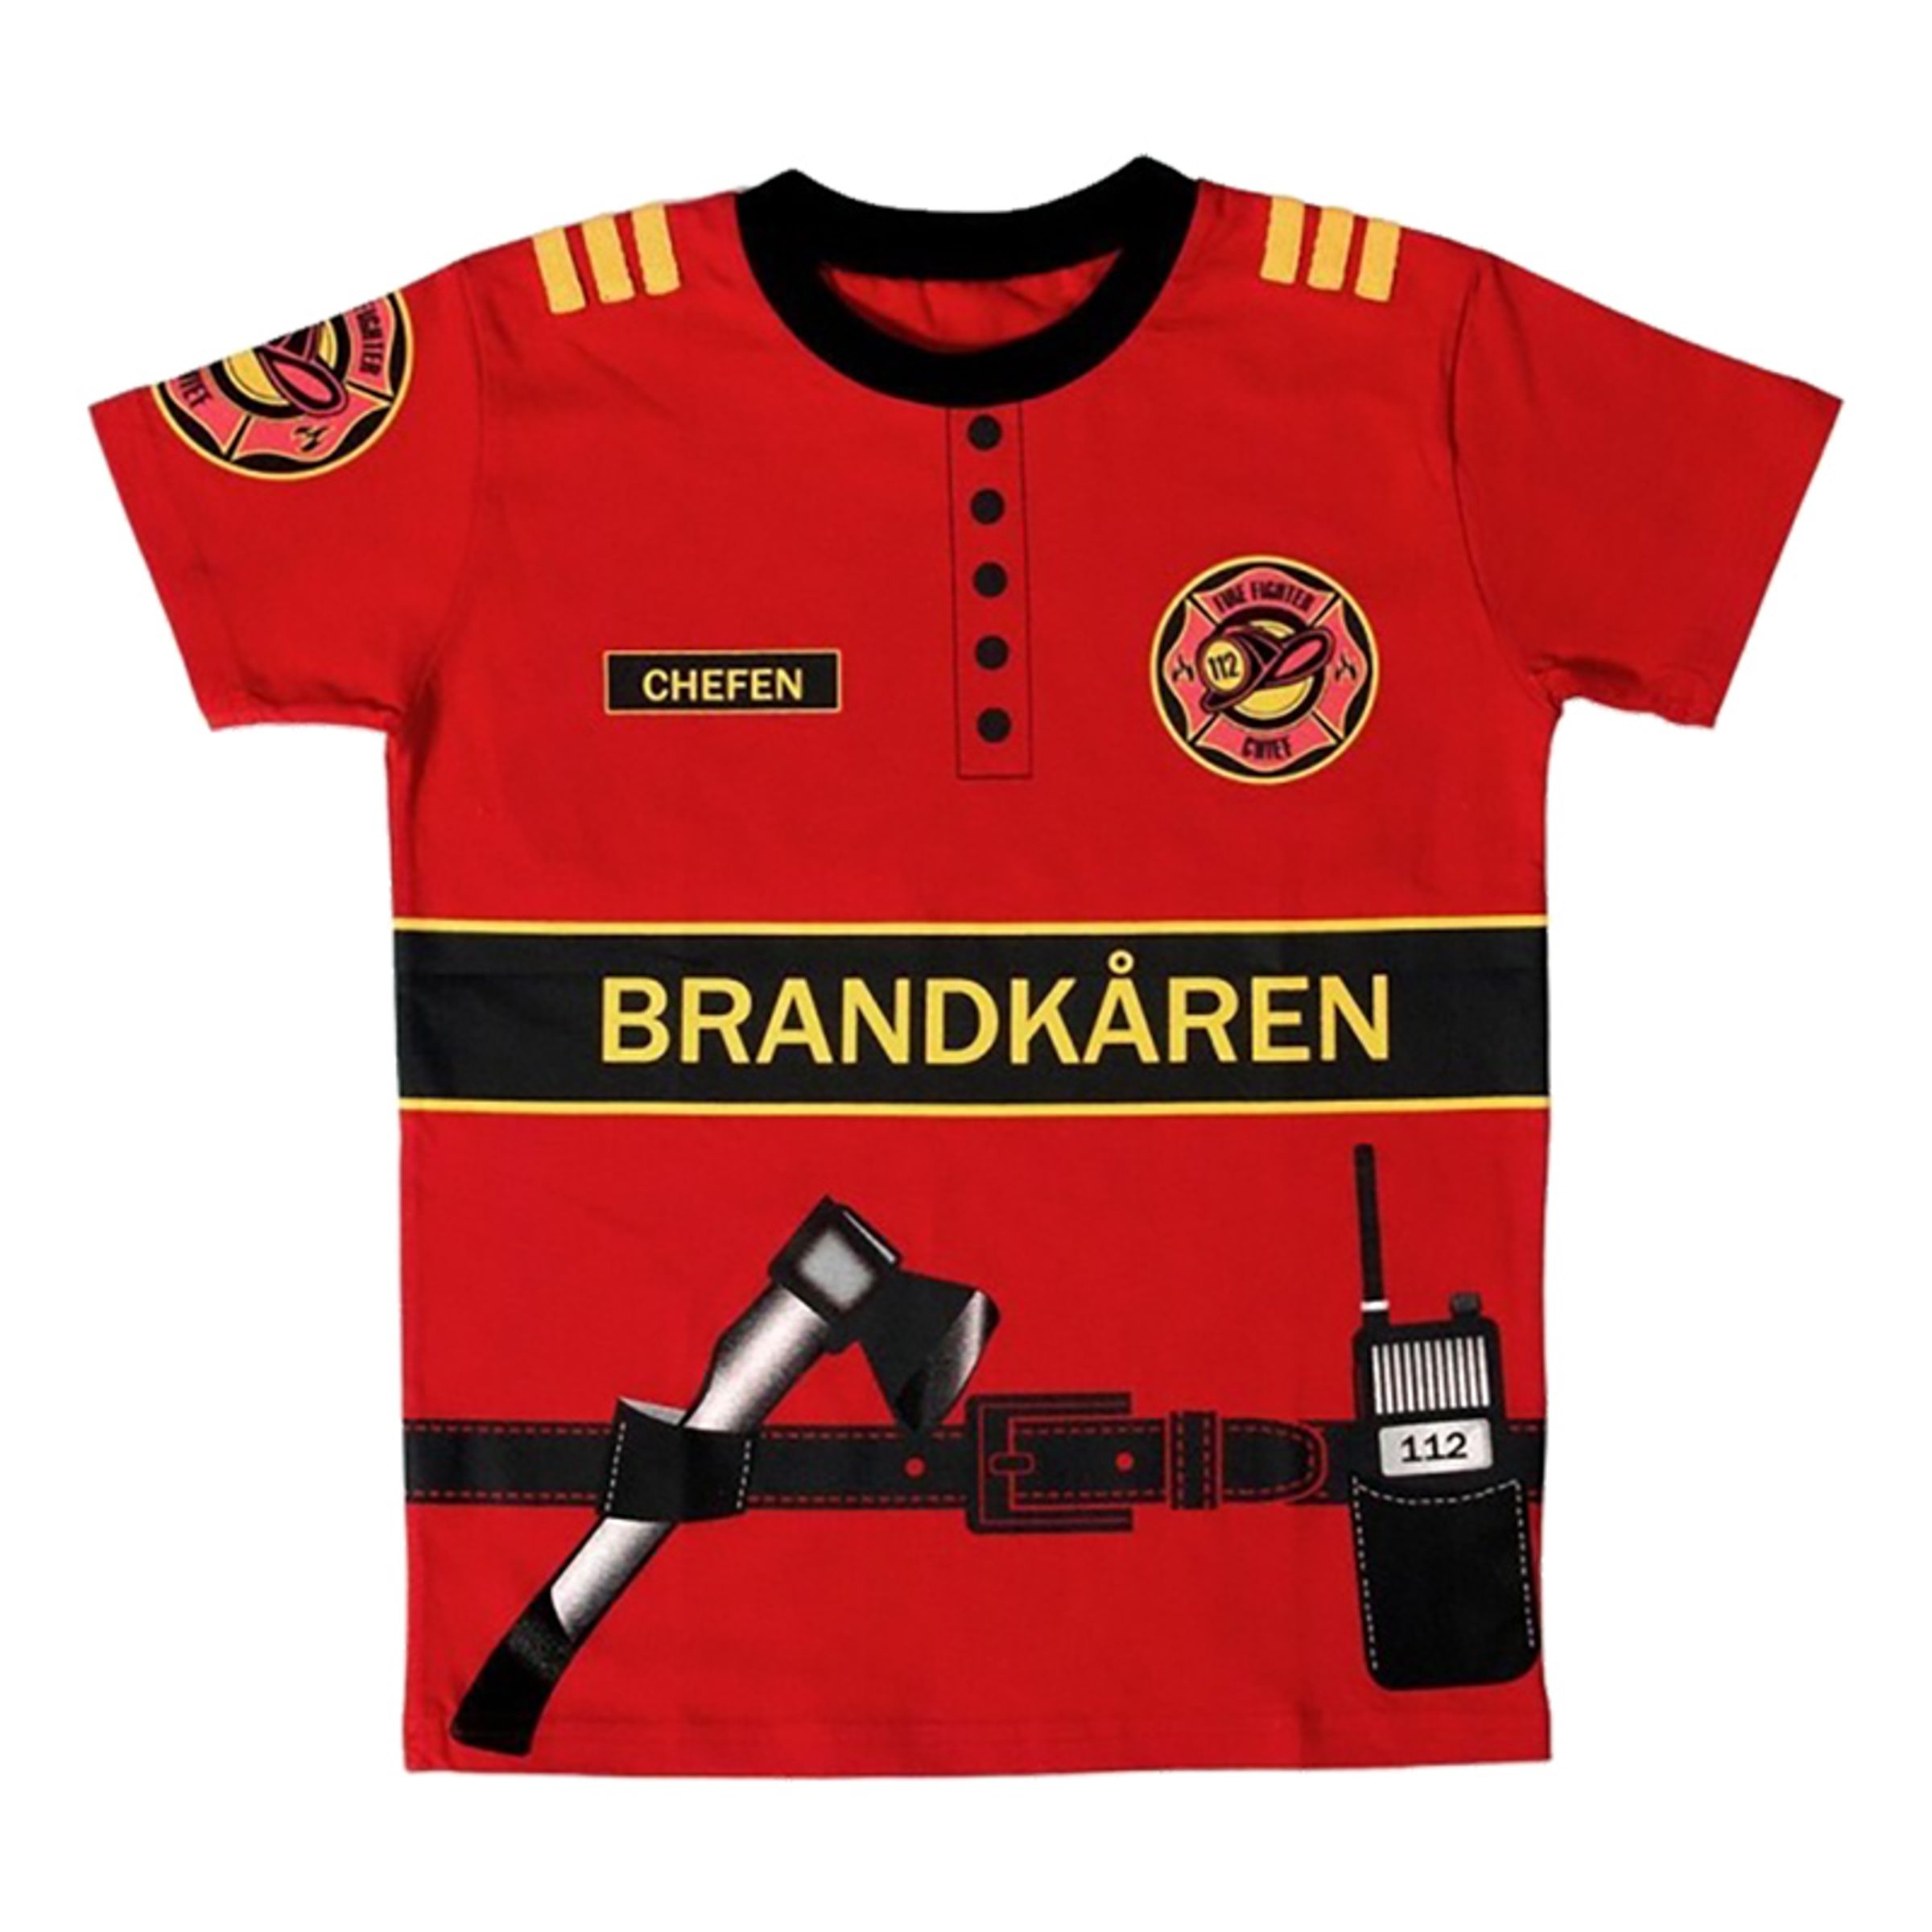 Brandman Barn T-shirt - Large